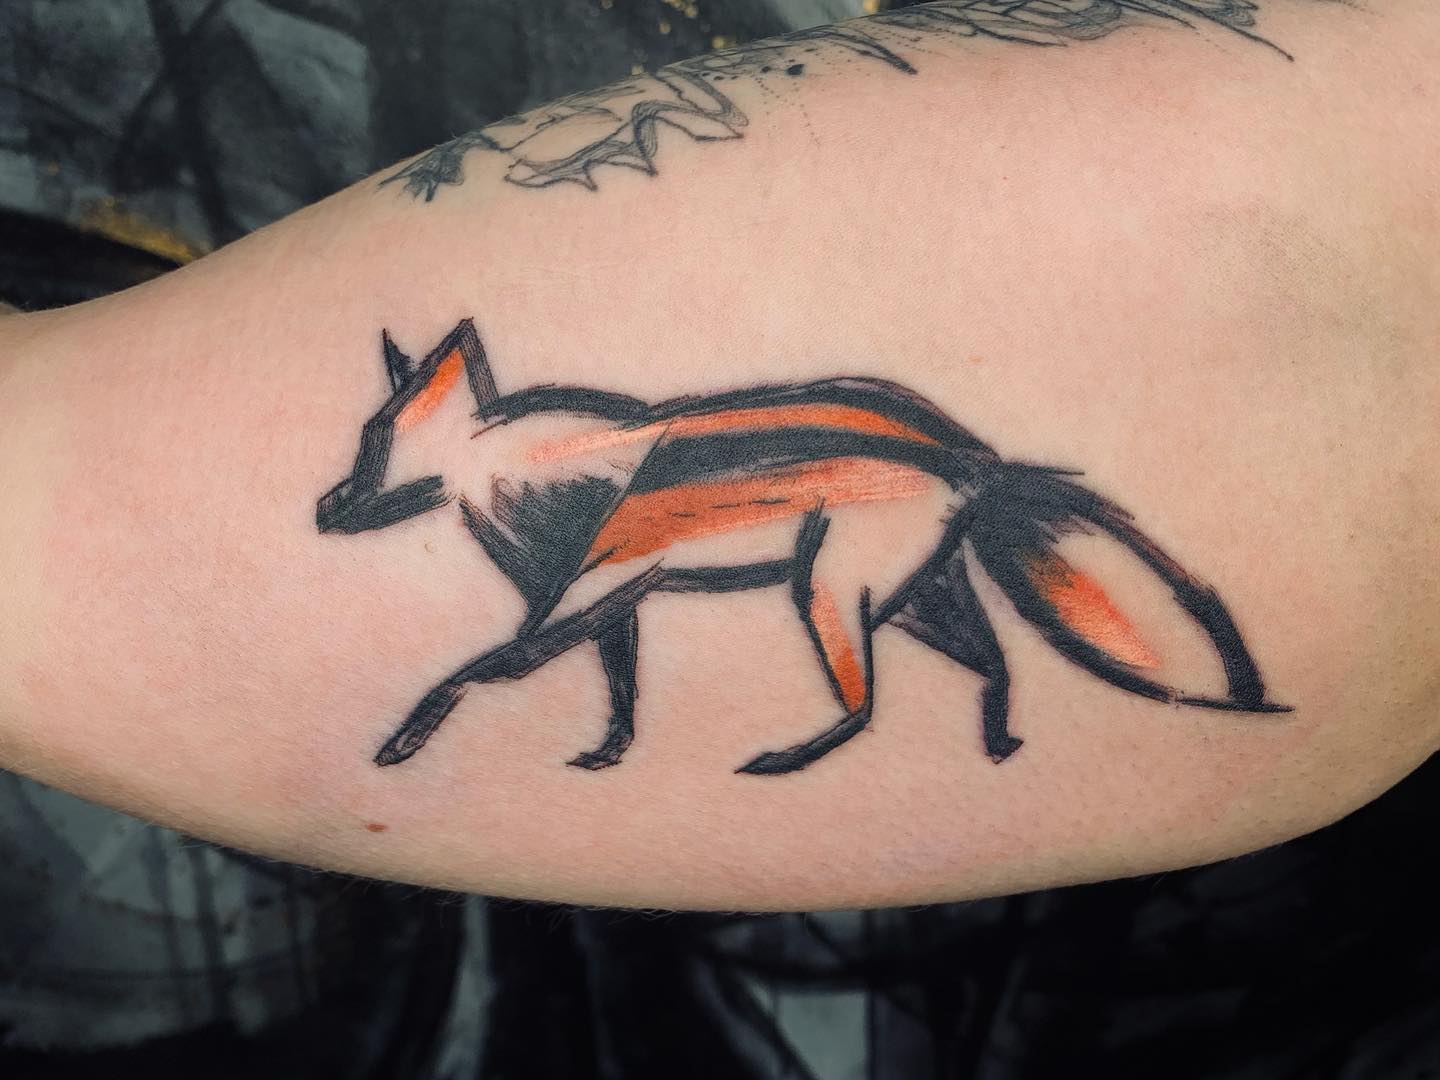 Tatuaje de un zorro pequeño, negro y naranja.